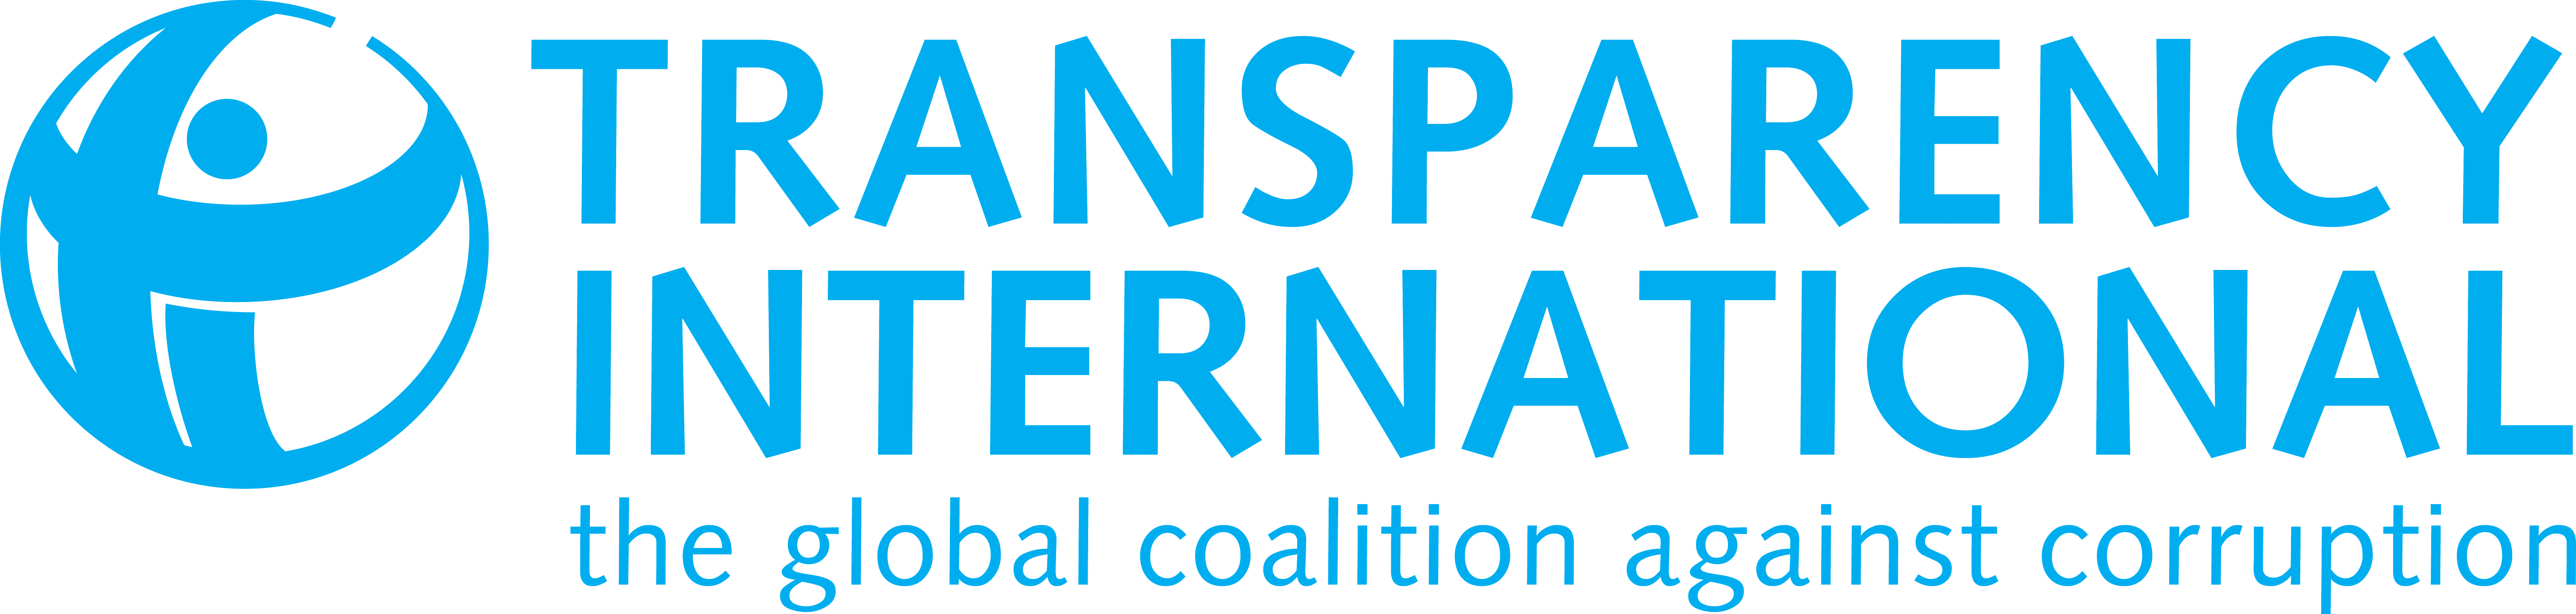 Transparency_International_logo_blue